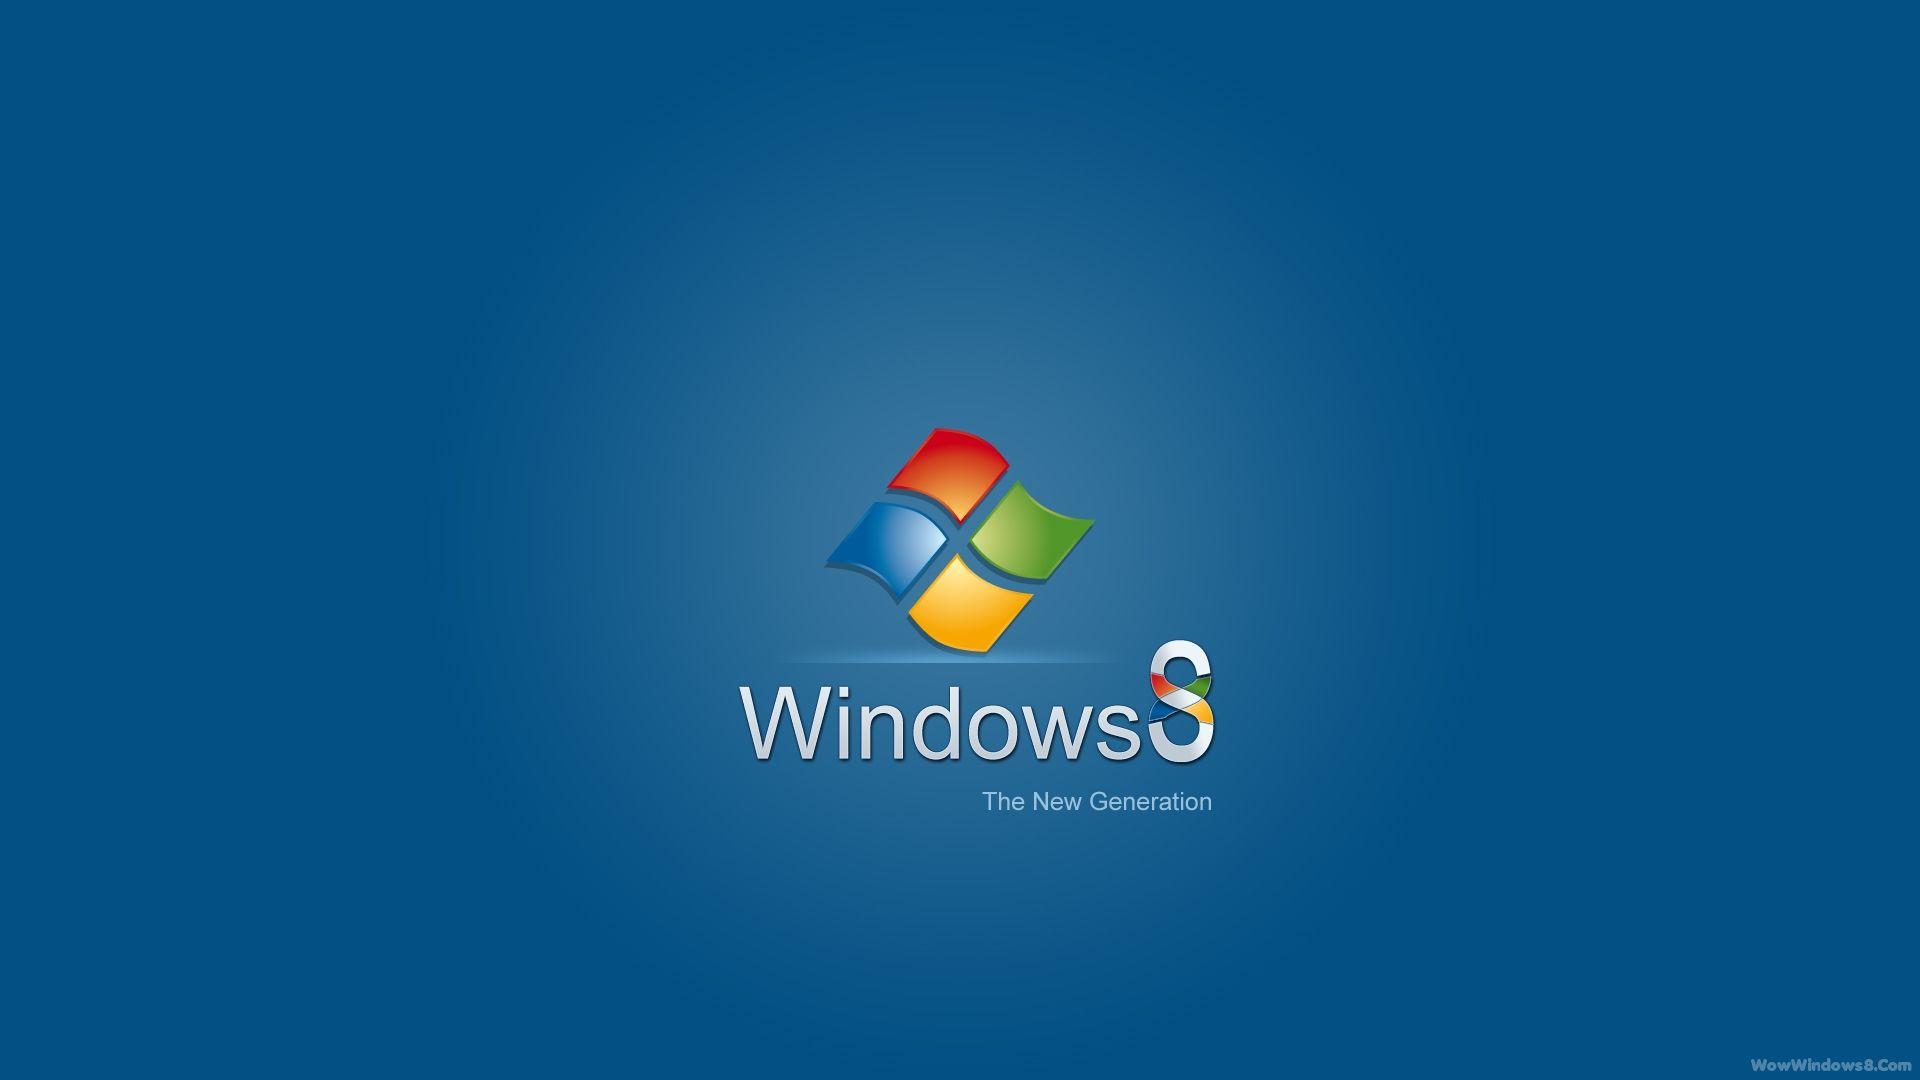 Windows 8 Wallpaper 2012 Windows 8 Wallpaper. Arab